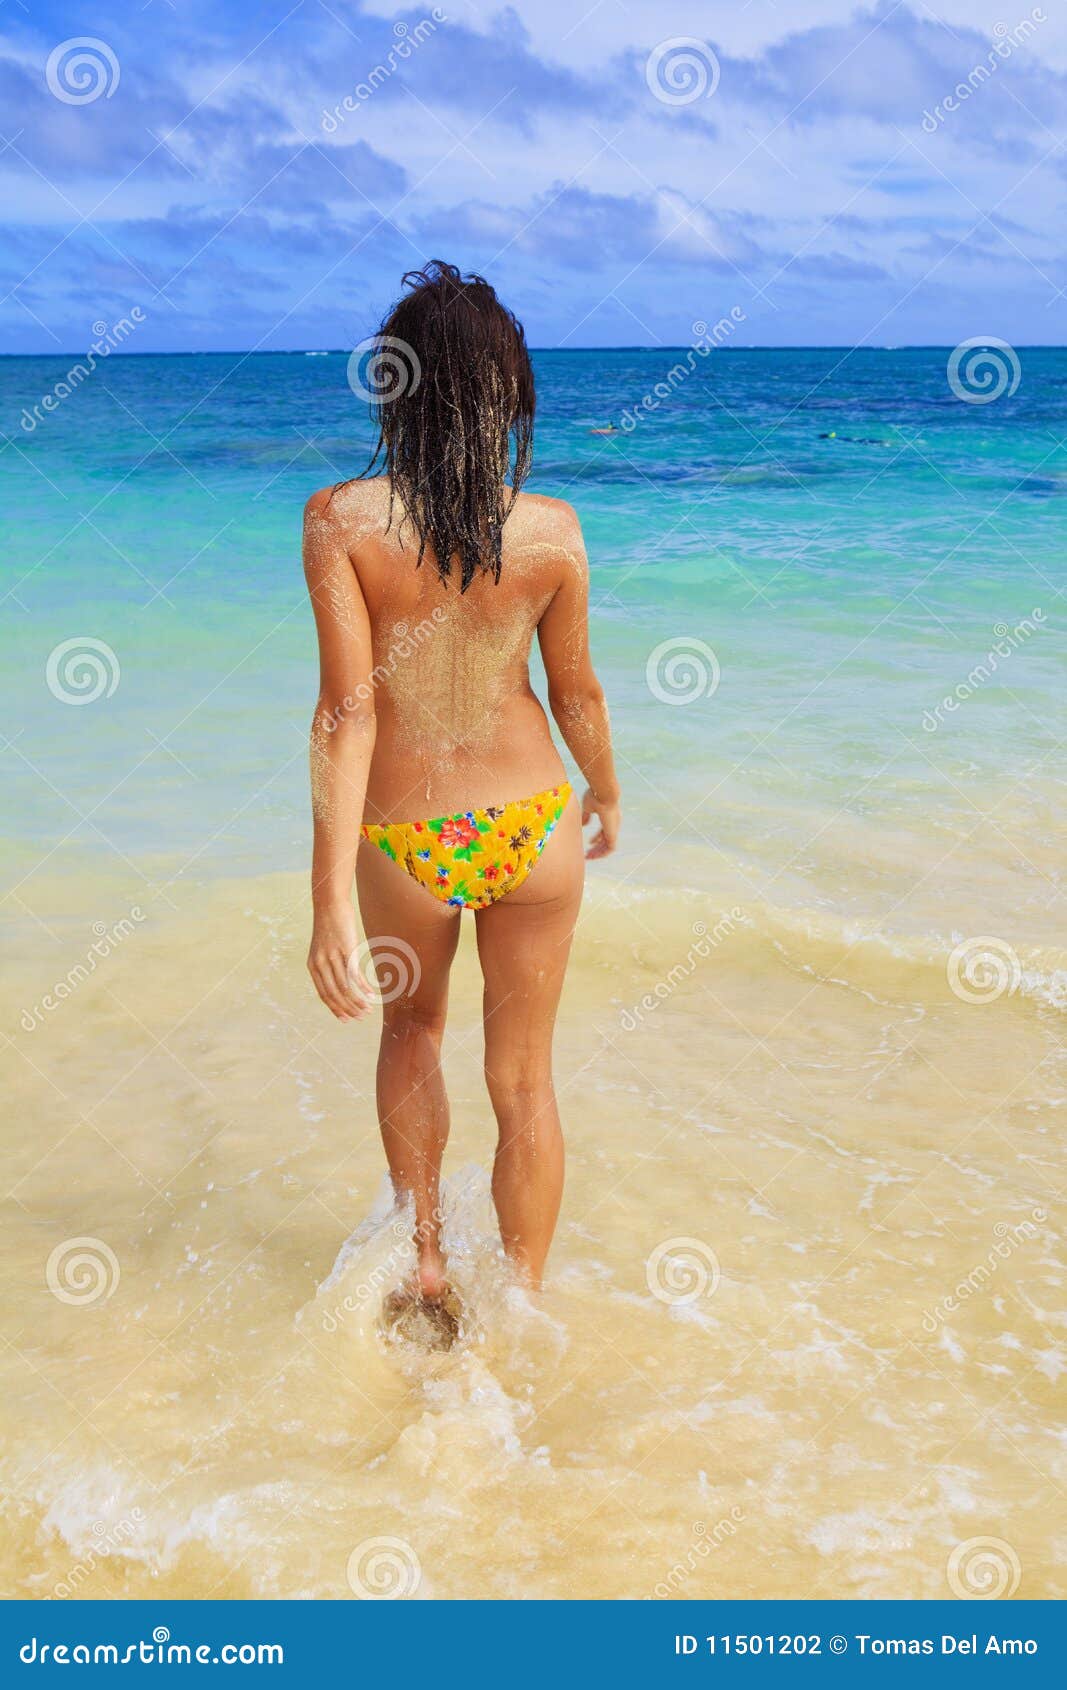 bilal gaba recommends Walking Topless On Beach